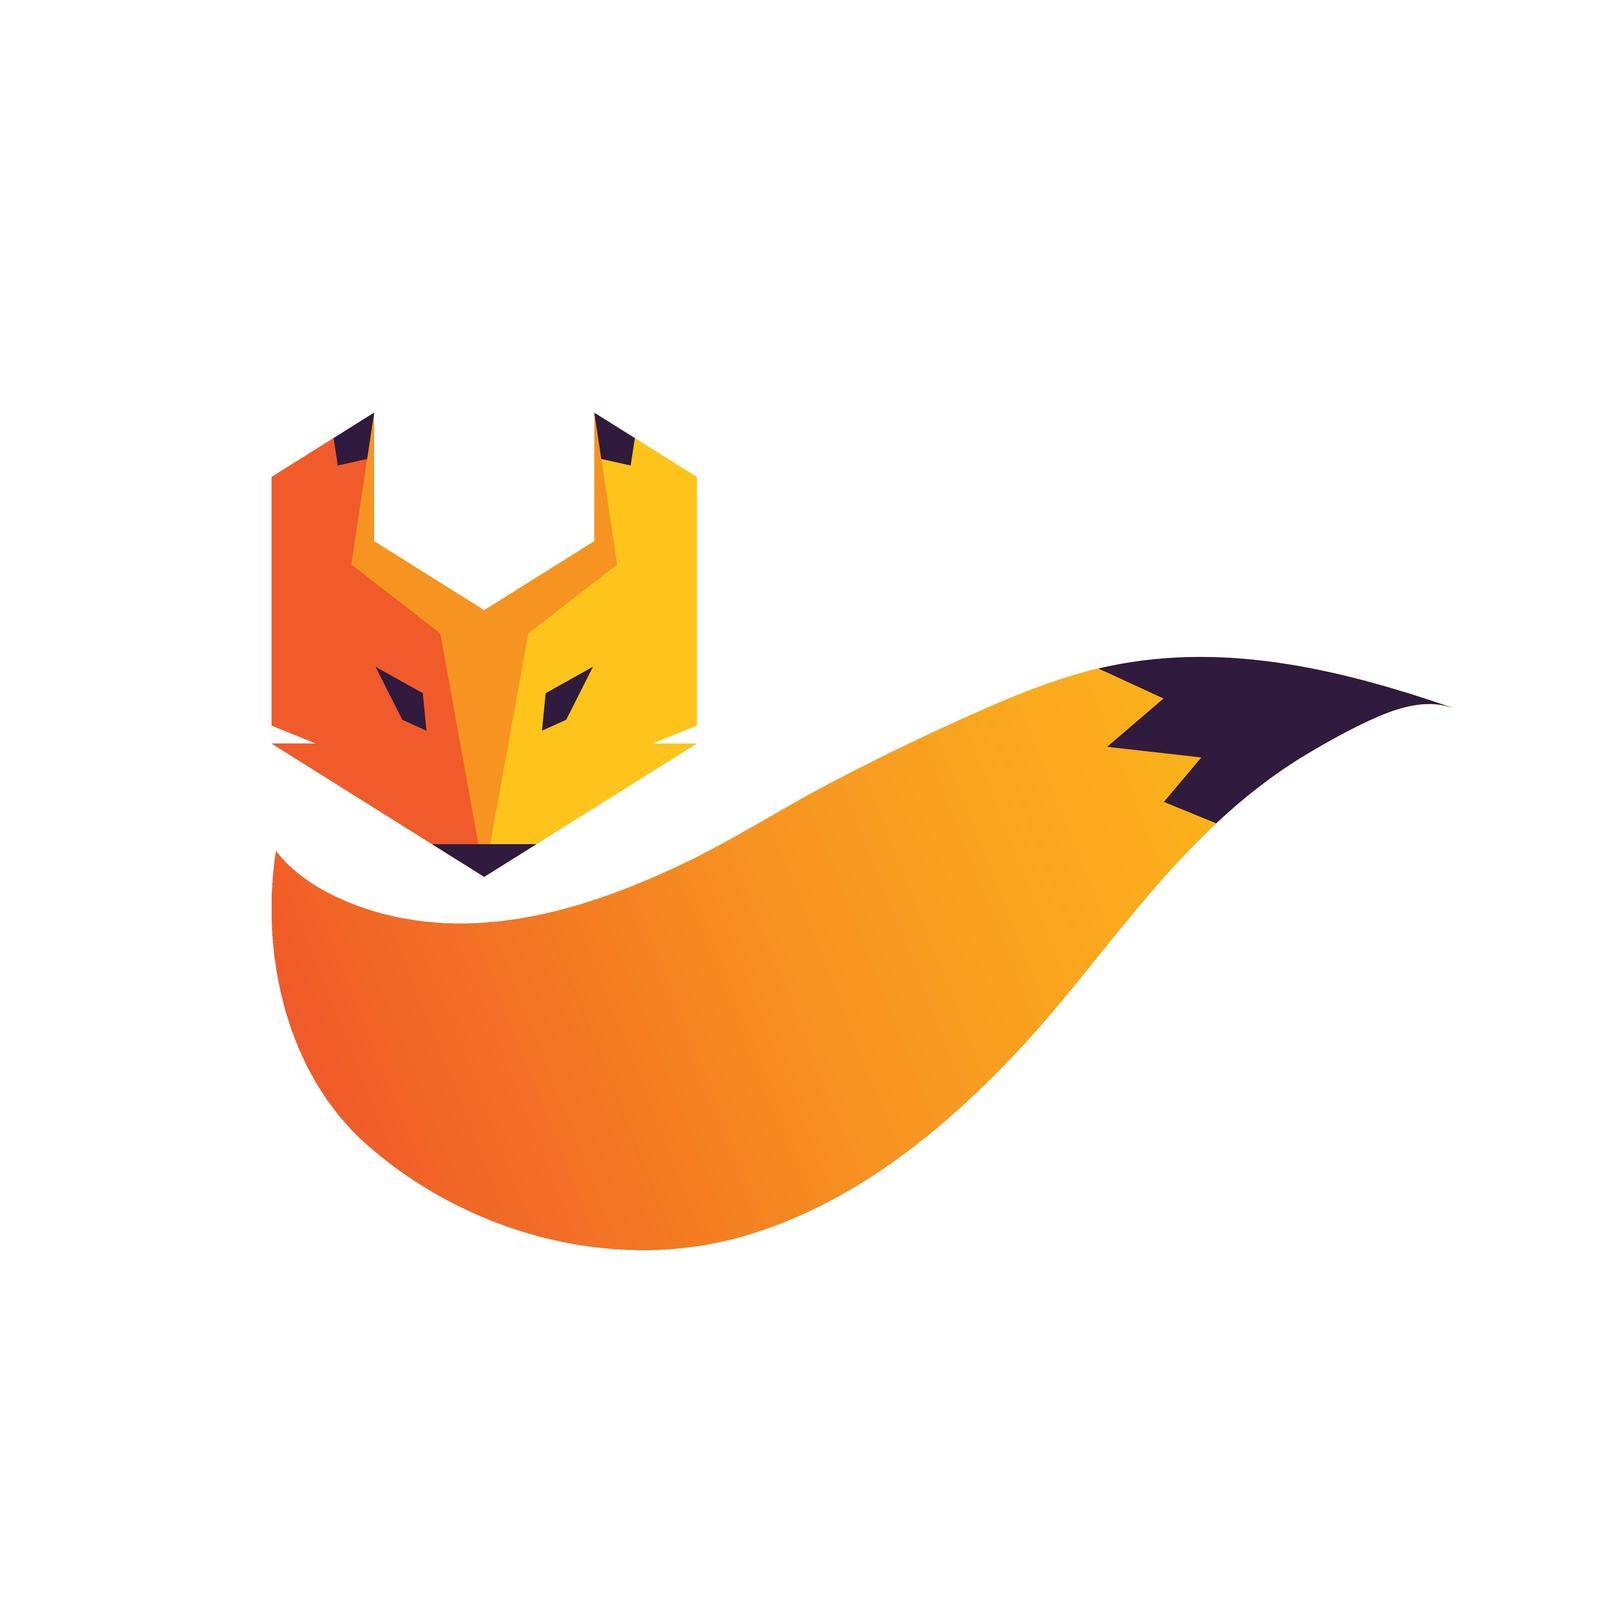 Fox head and tail logo by siraanamwong